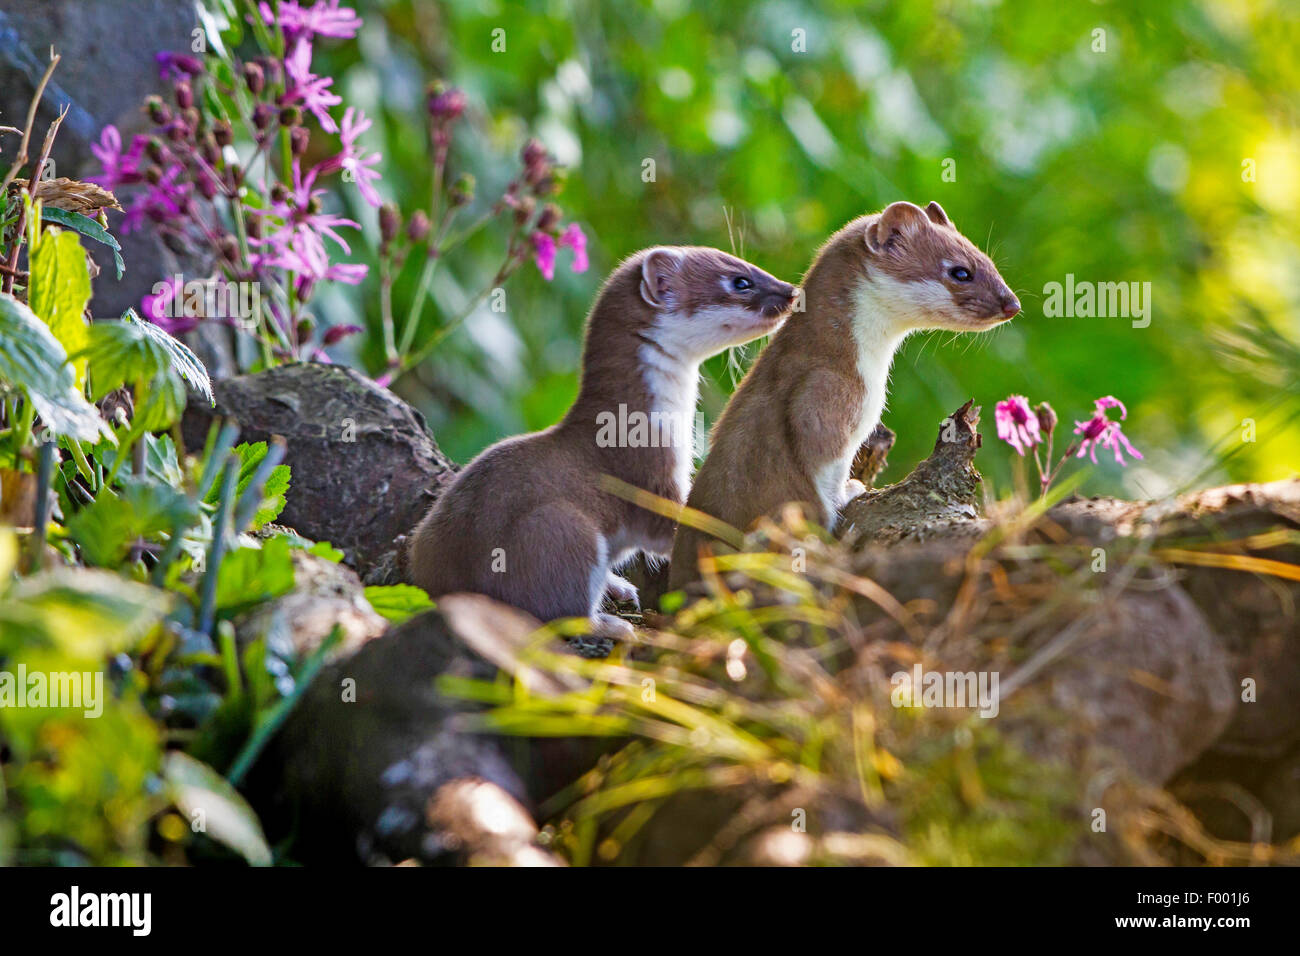 Hermelin, Hermelin, kurzschwänzige Wiesel (Mustela Erminea), spielen zwei Hermeline auf Protokolle, Schweiz, Sankt Gallen, Kaan Stockfoto